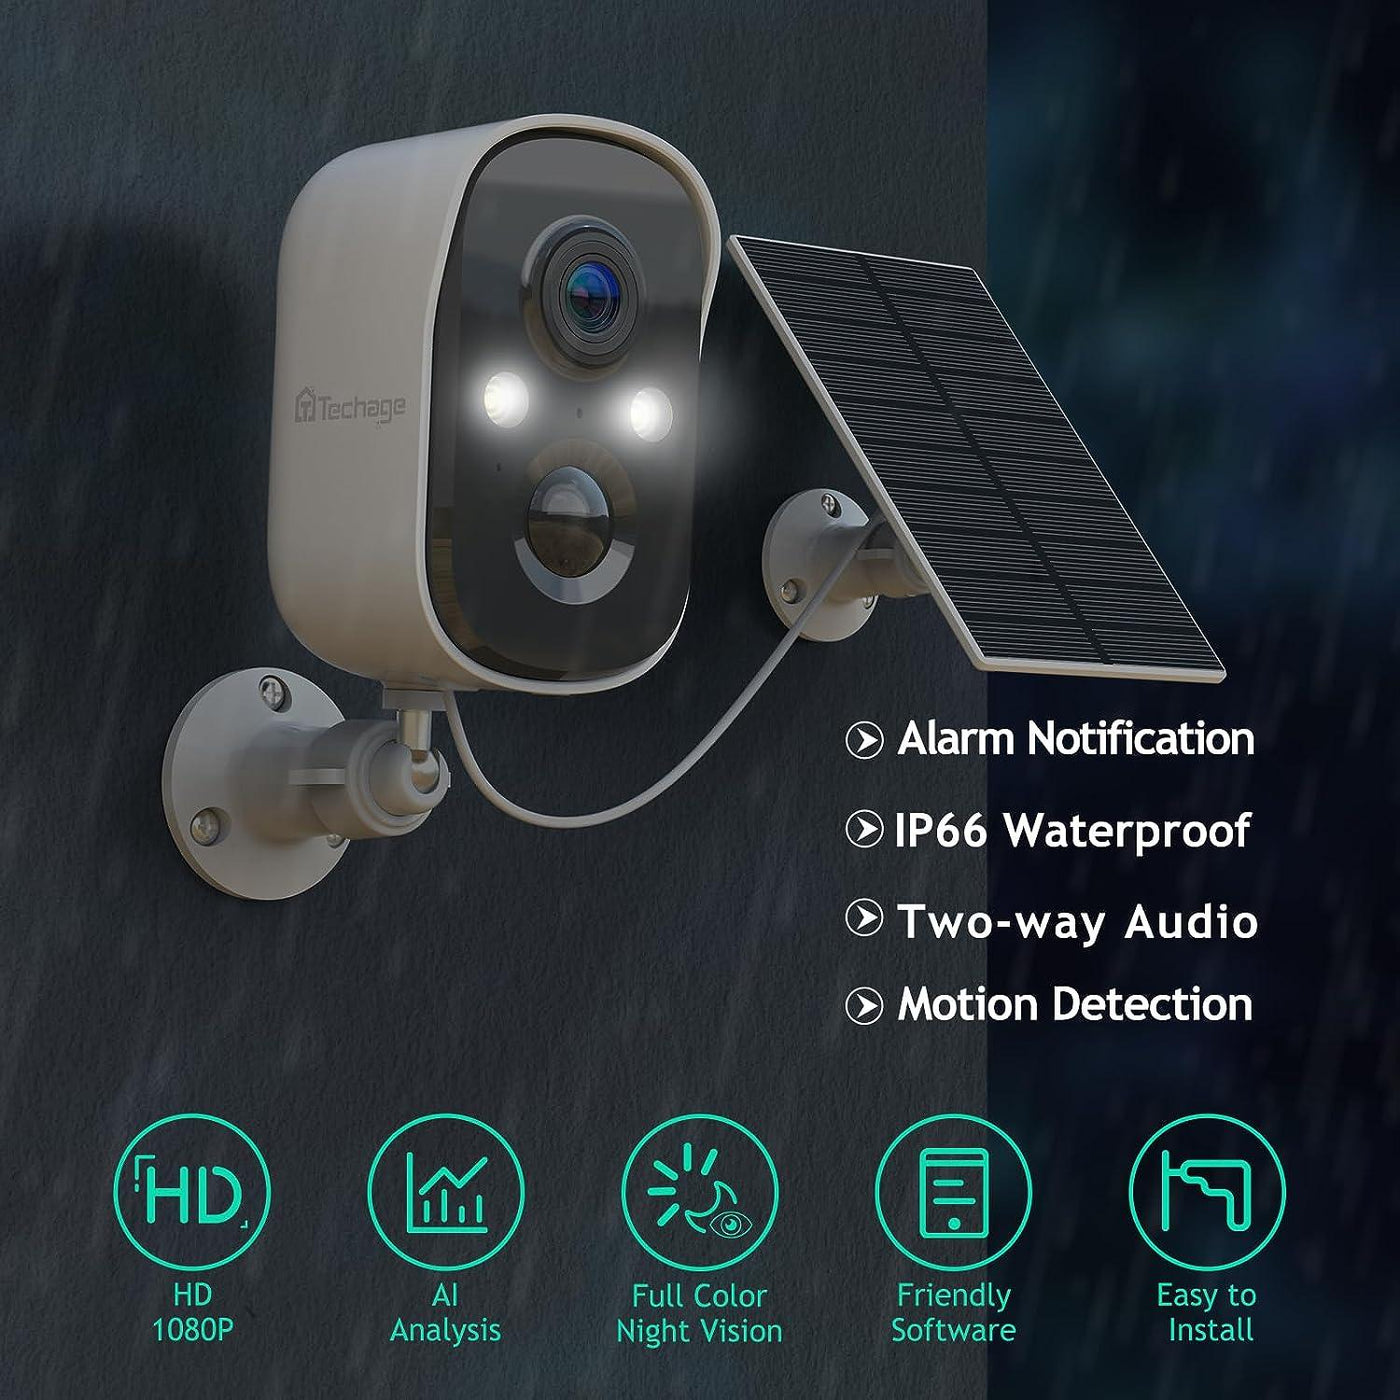 Techage Solar Security Cameras Wireless Outdoor, 1080p AI Detection - Massive Discounts